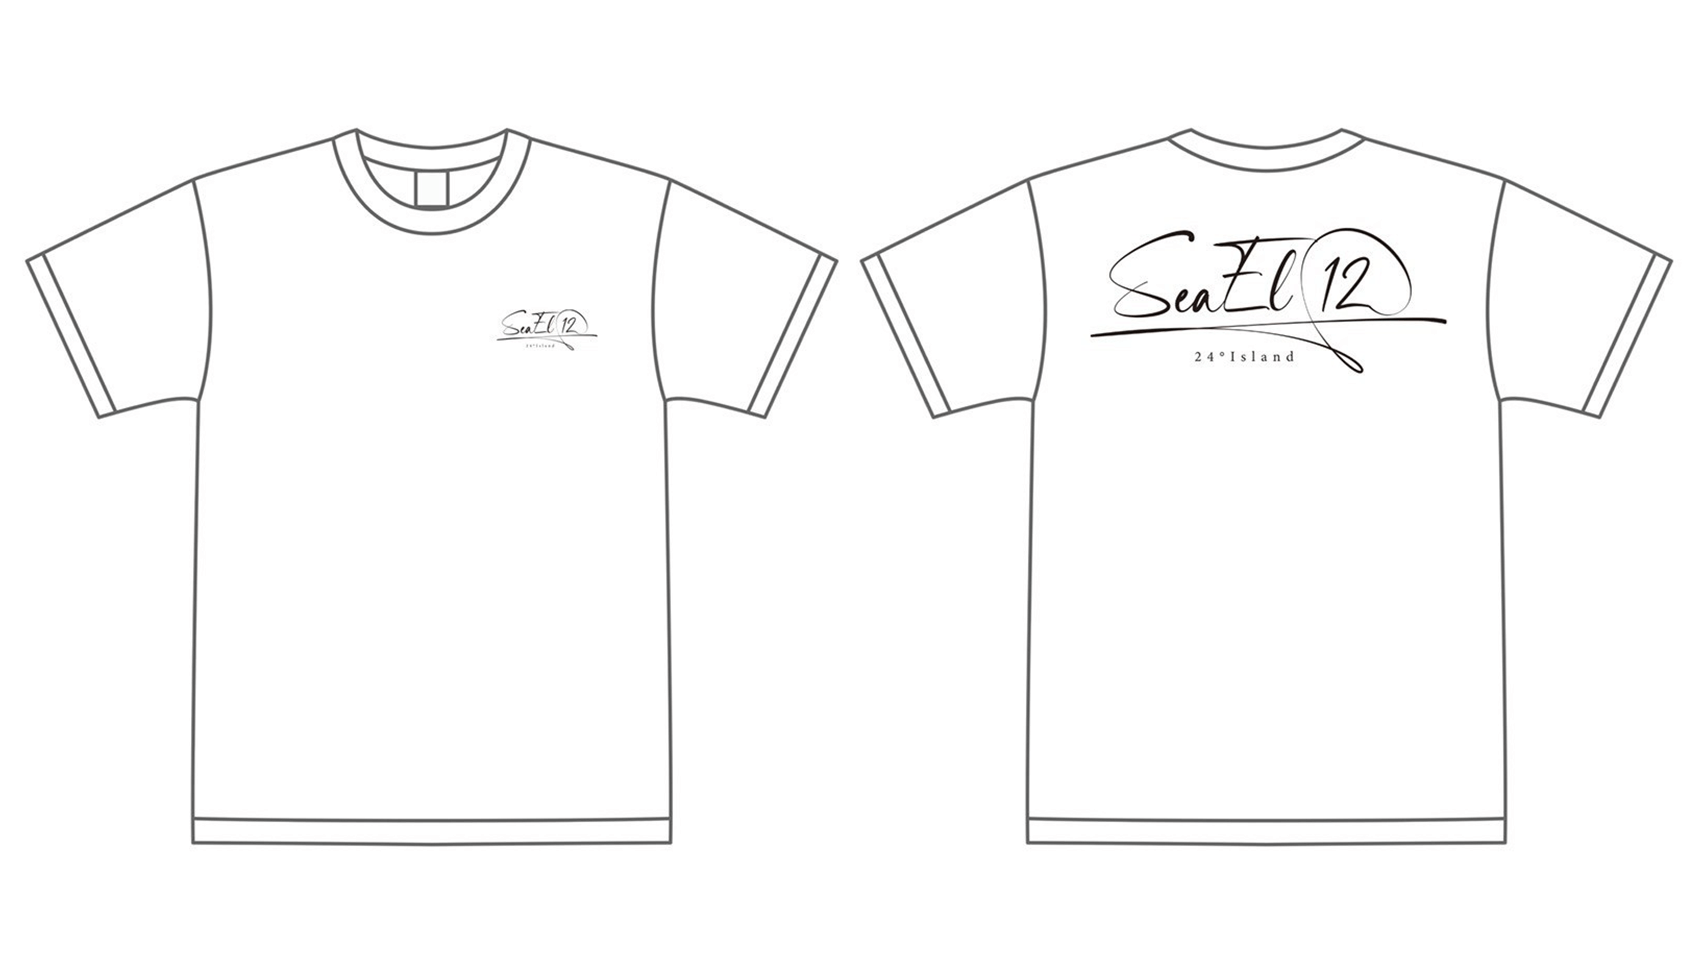 SEAEL12 Tシャツ